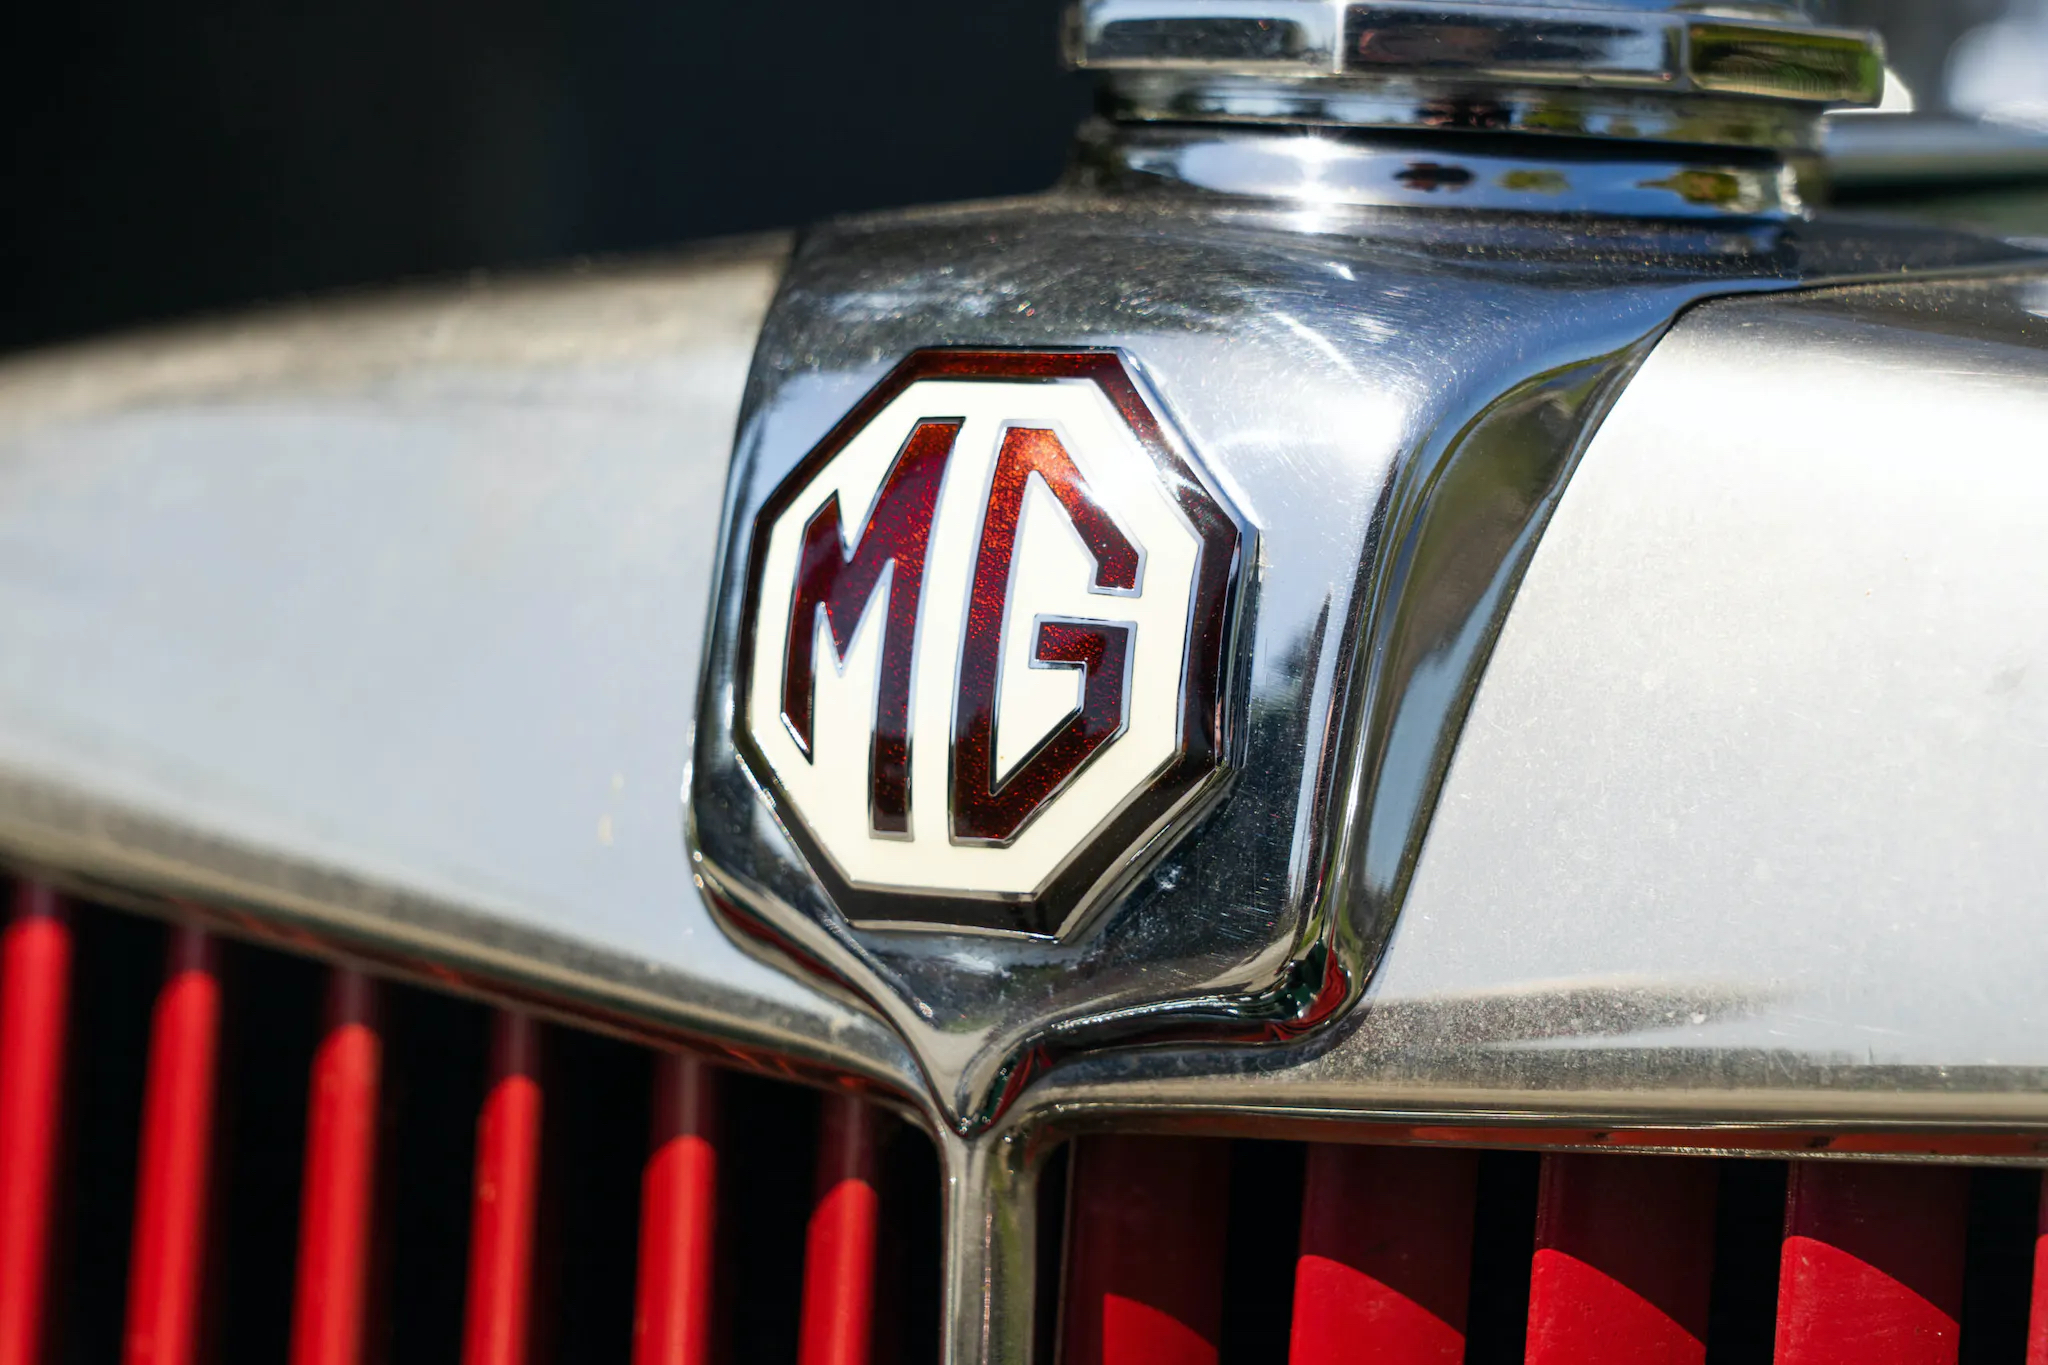 News & Events - MG Car Club